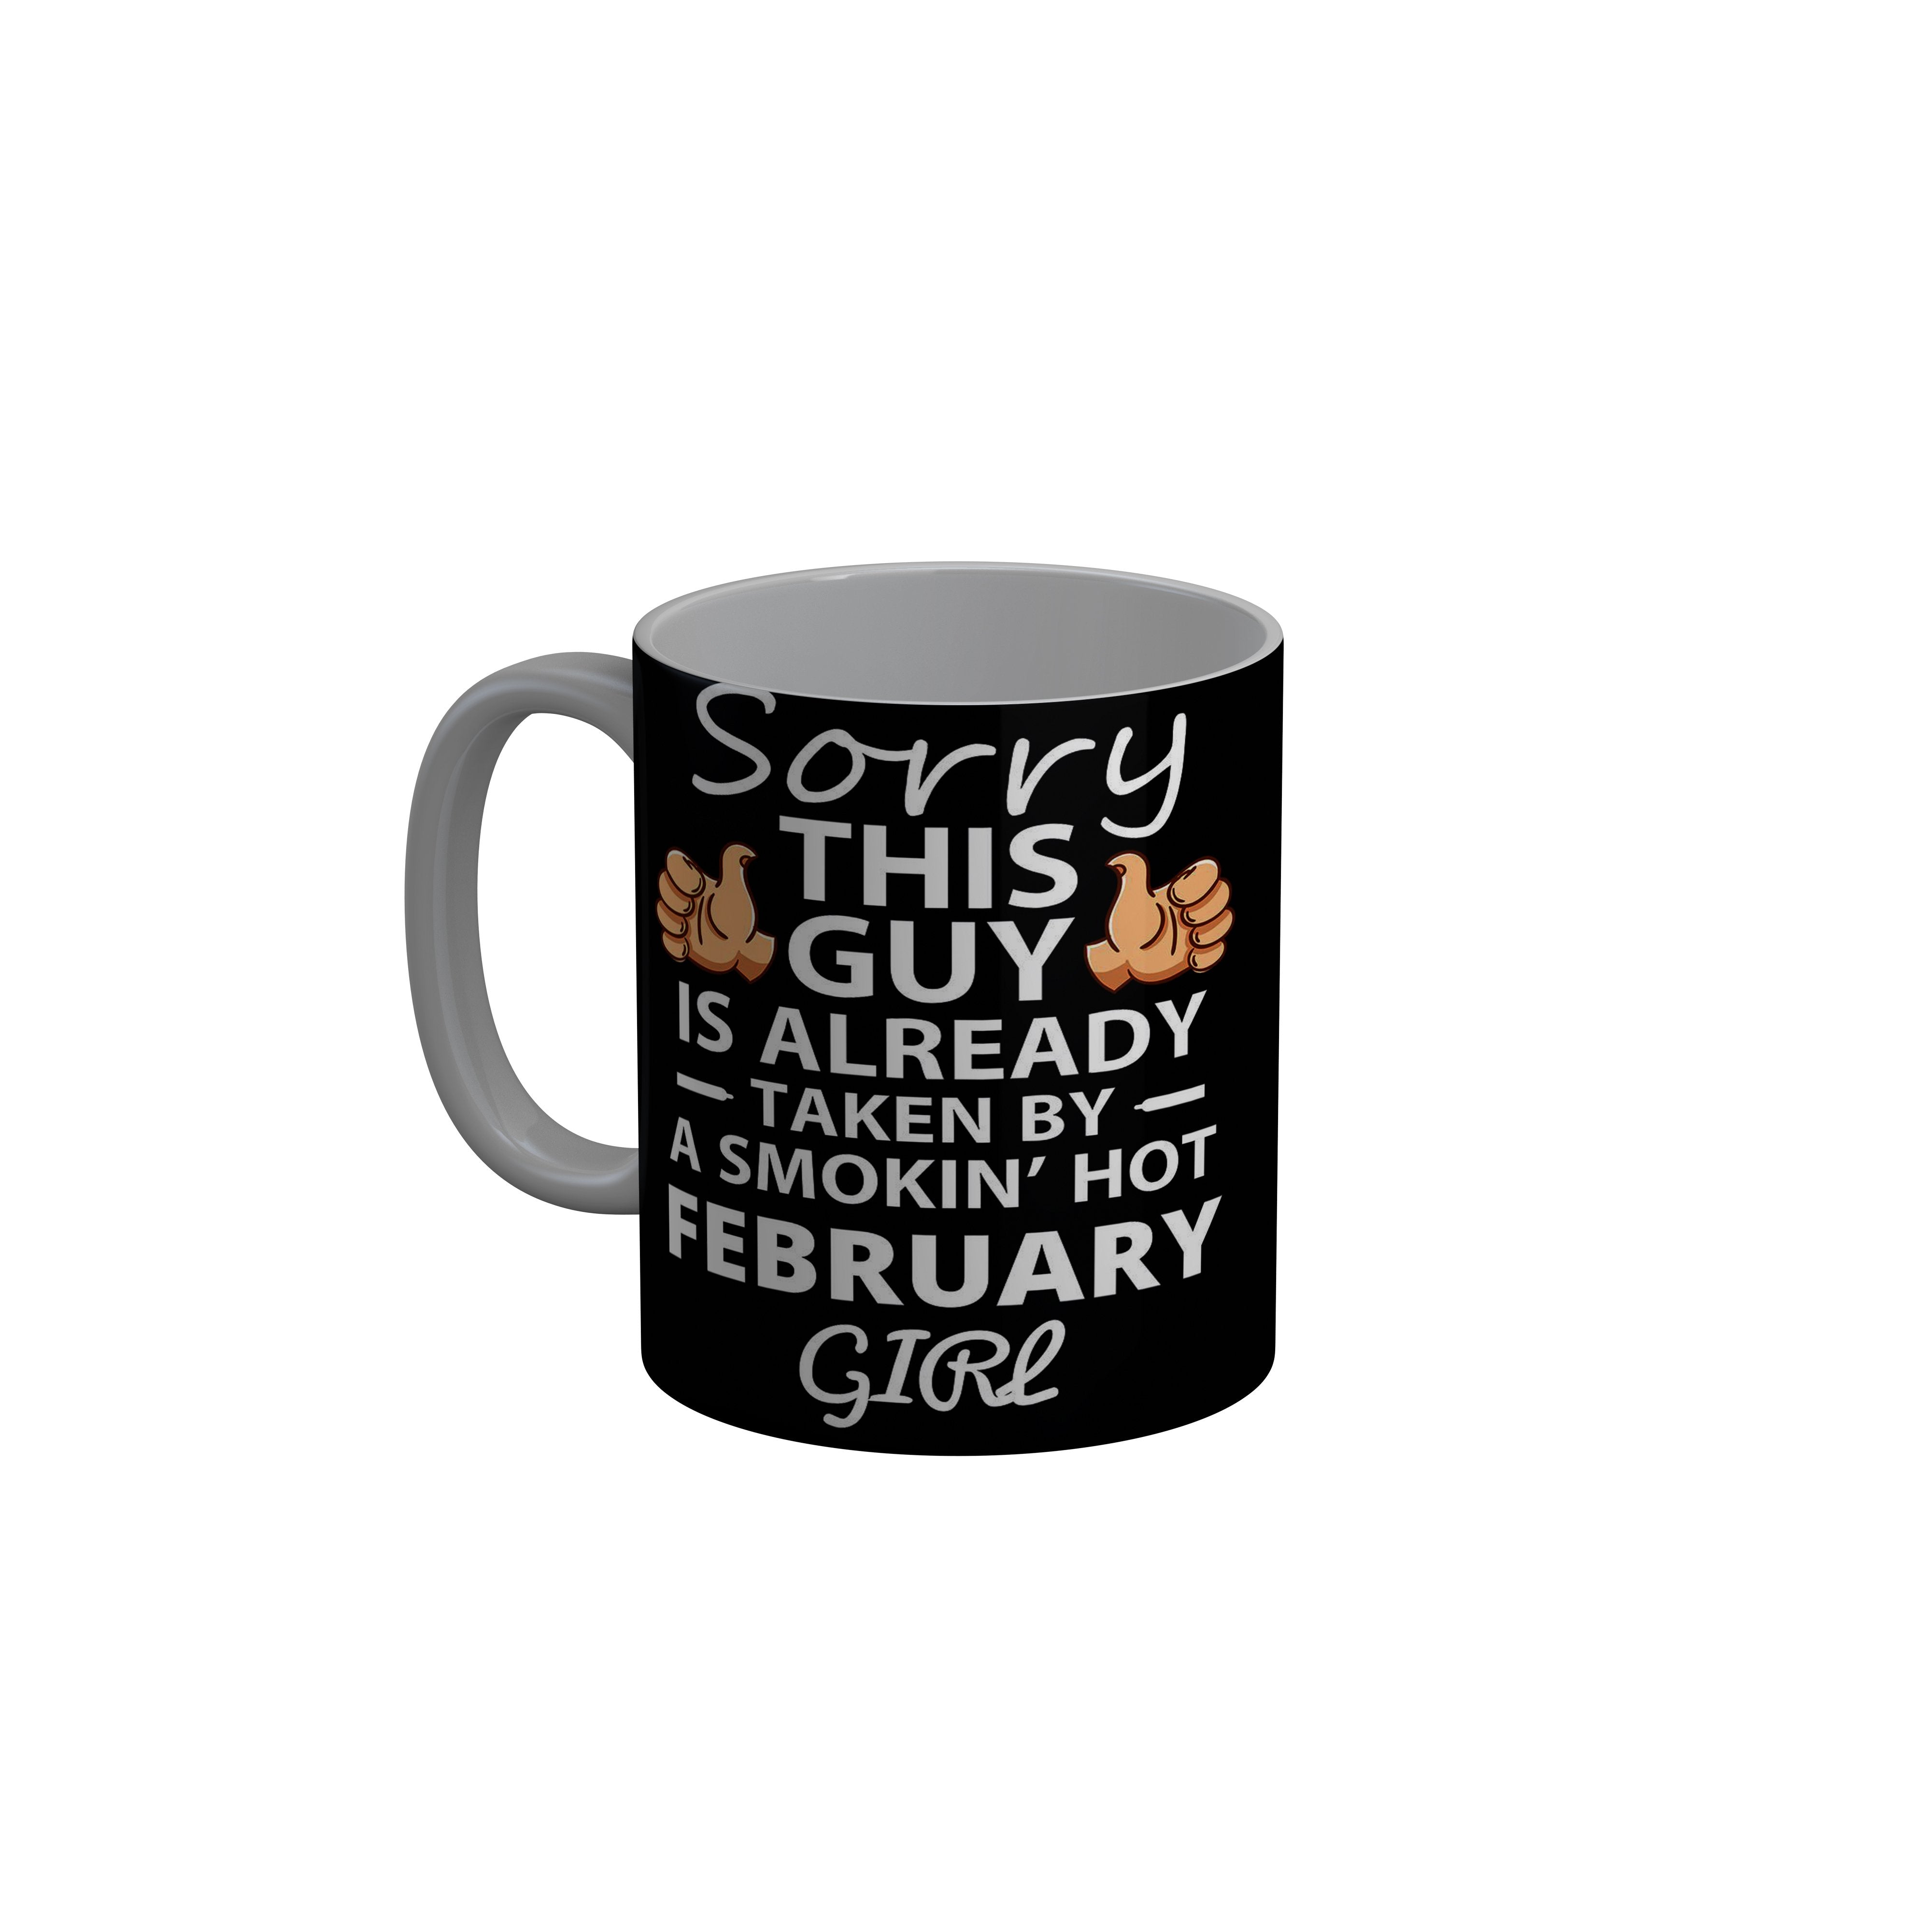 FashionRazor Legends Are Born In May Black Birthday Quotes Ceramic Coffee Mug, 350 ml